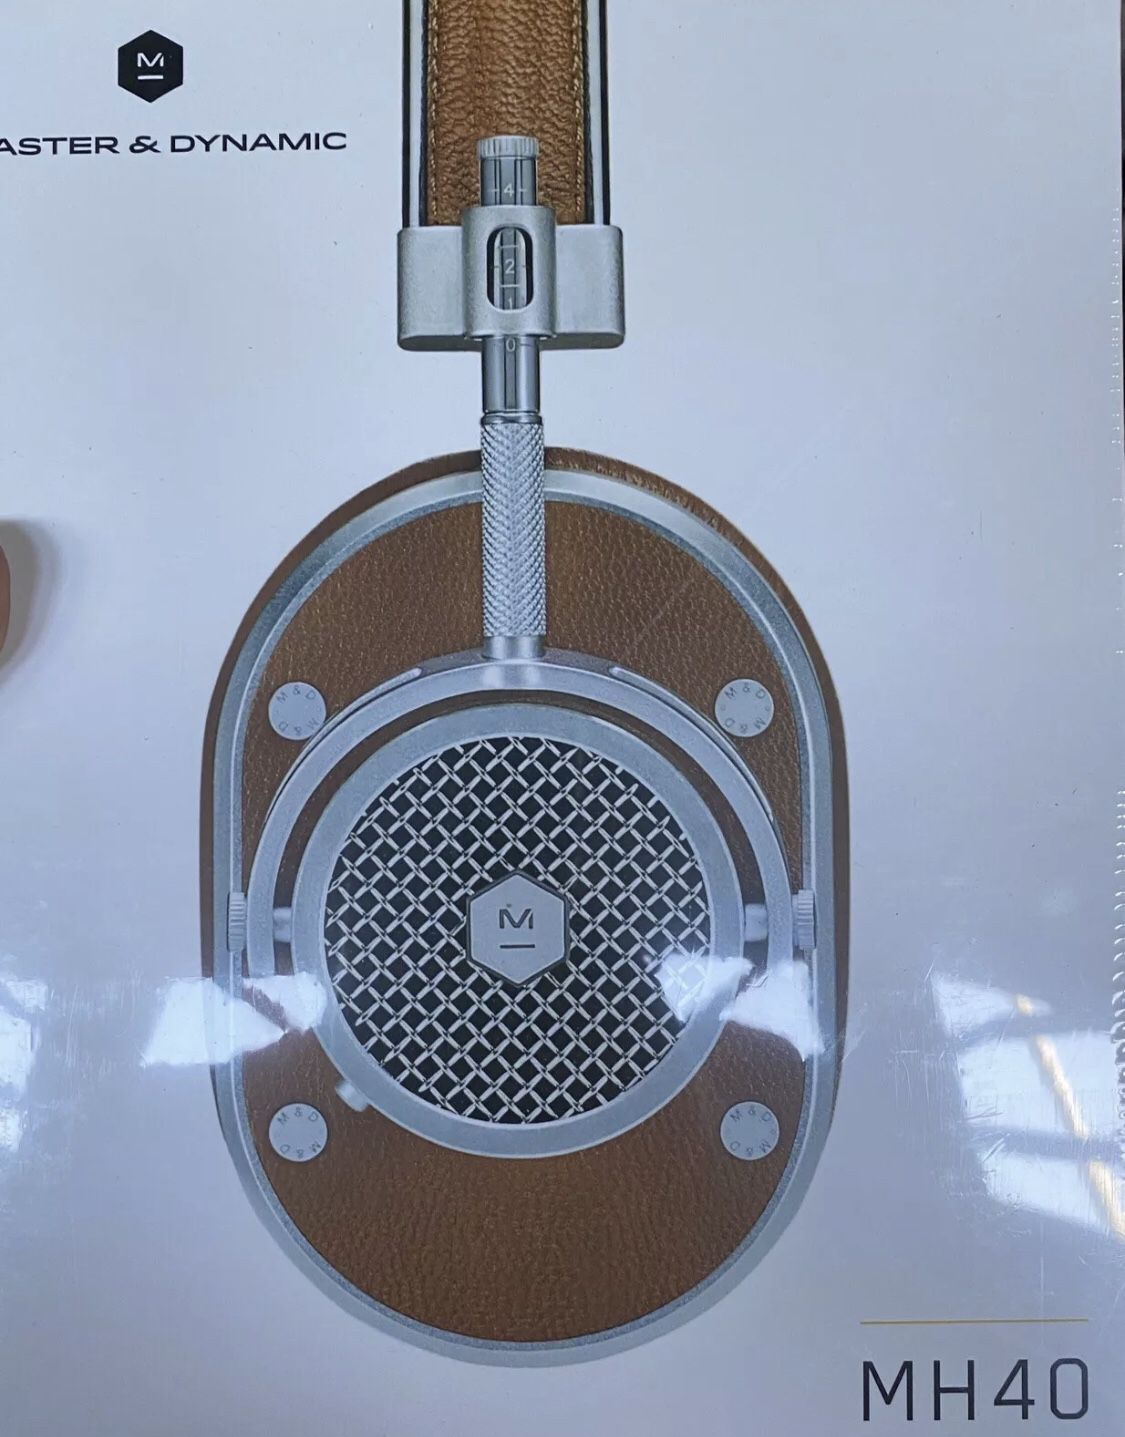 Master & Dynamic MH40 Over-Ear Headphones - Tan Leather